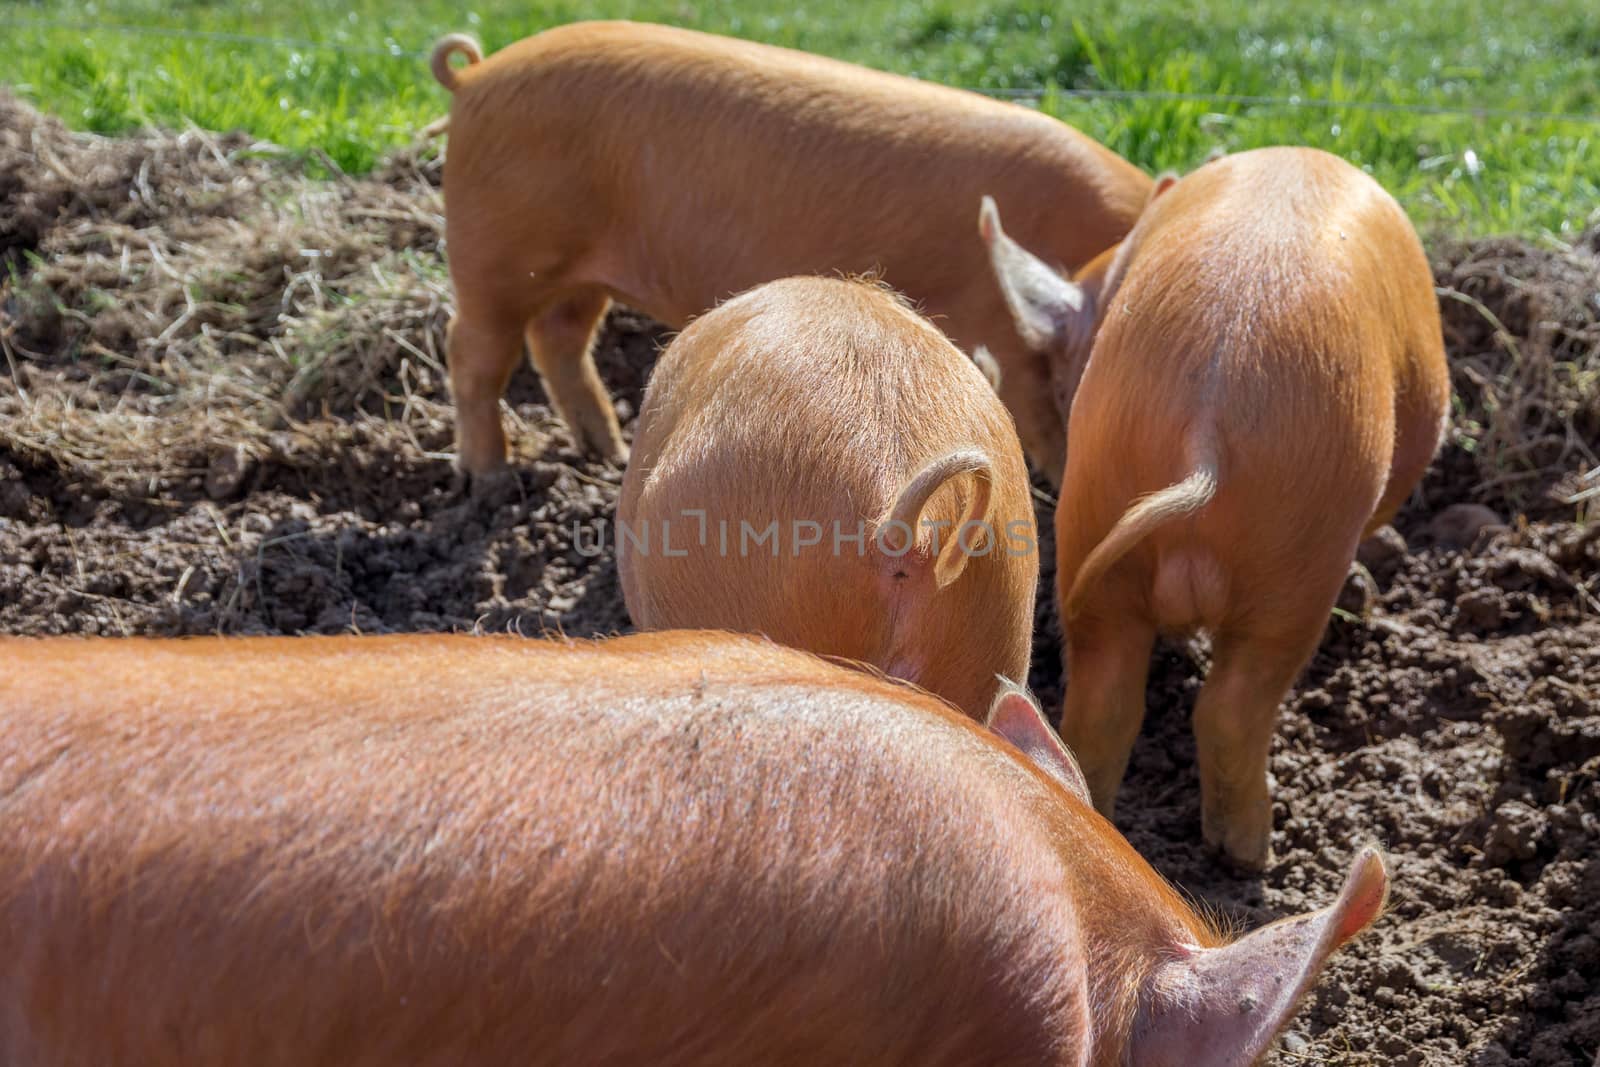 Tamworth Pigs by magicbones